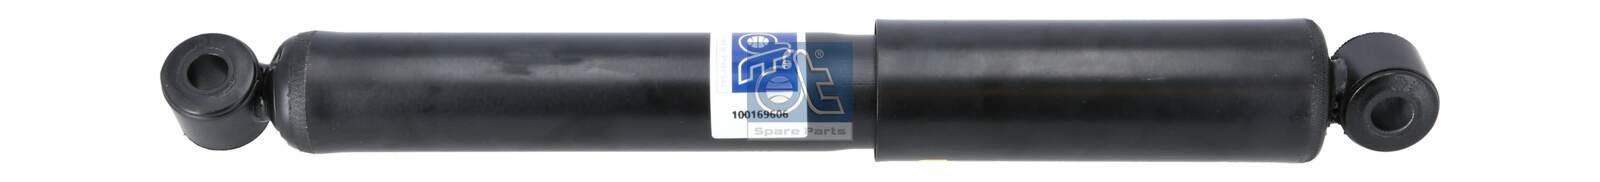 DT Spare Parts 12.60009 Shock absorber Rear Axle, Gas Pressure, Telescopic Shock Absorber, Top eye, Bottom eye